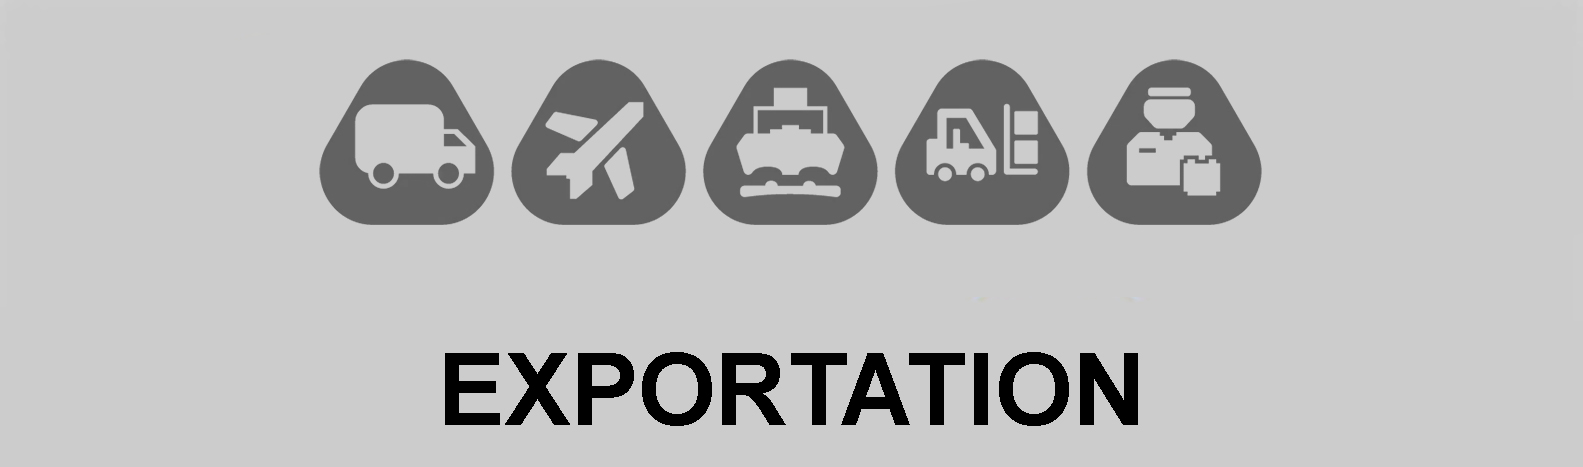 exportation